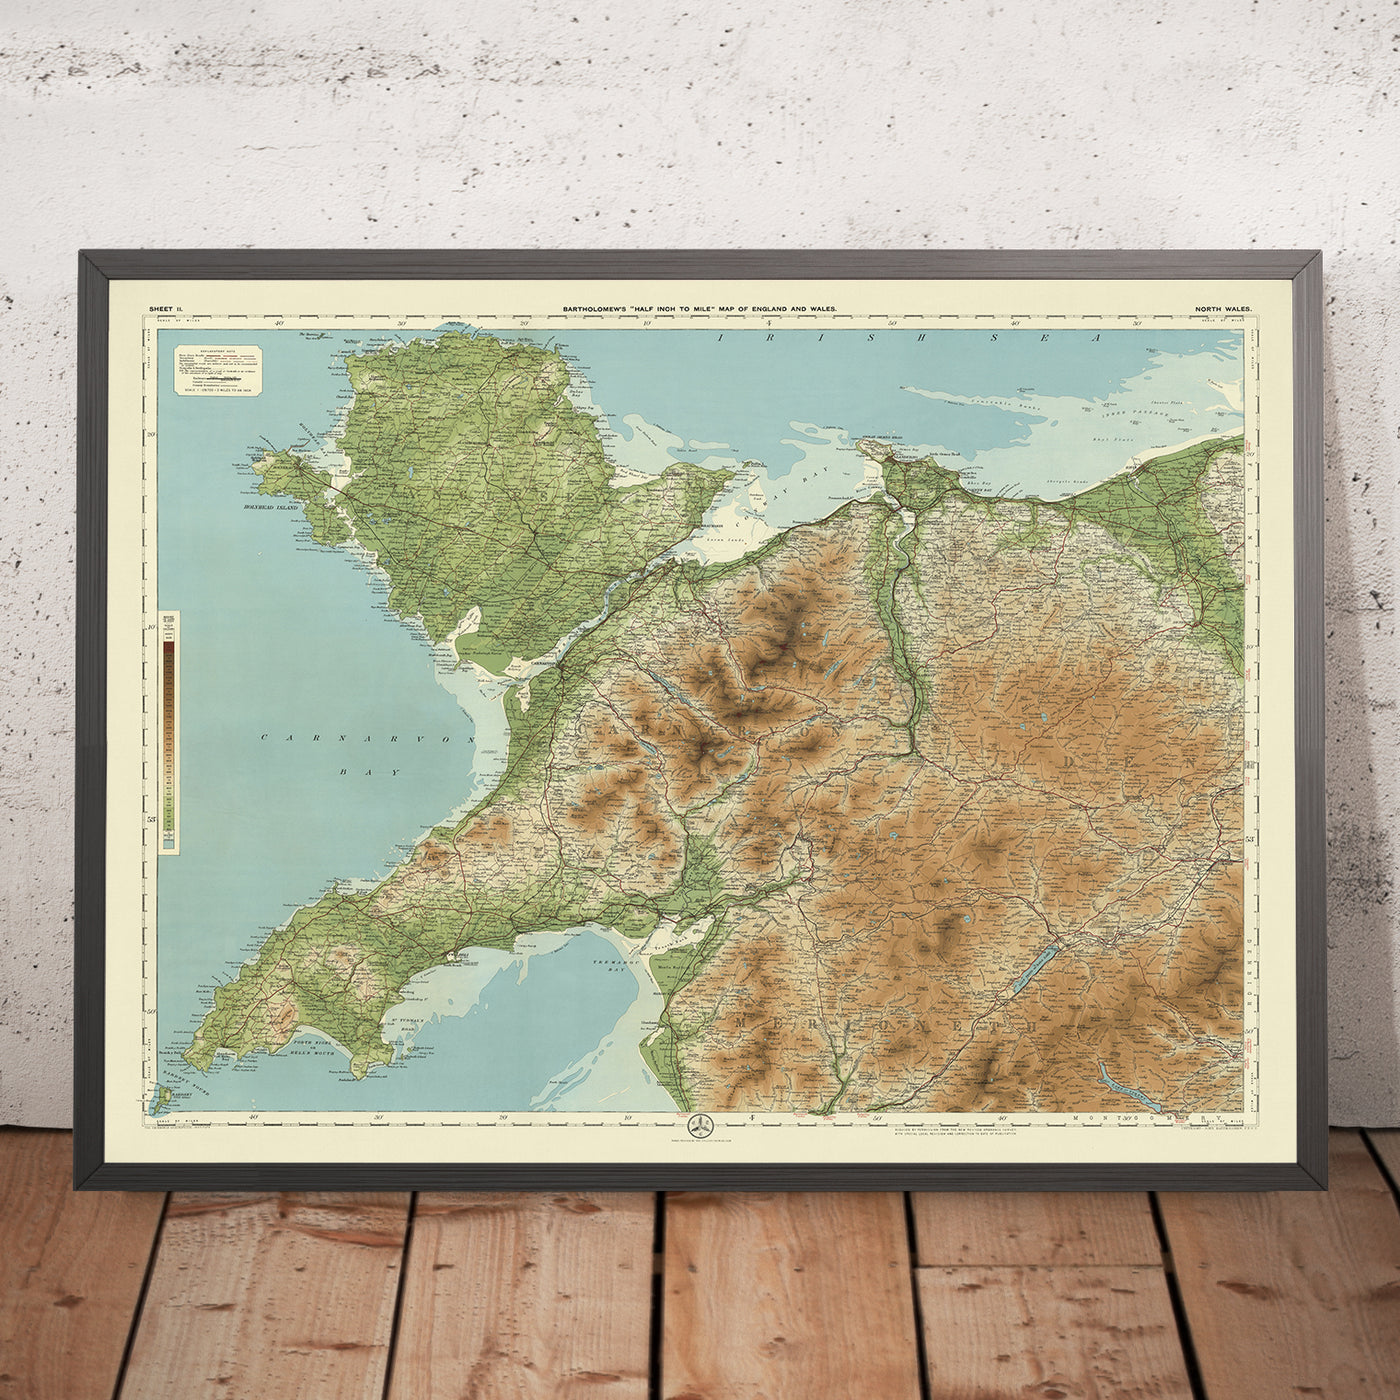 Old OS Map of North Wales by Bartholomew, 1901: Snowdon, Caernarfon, Llandudno, Menai Strait, Conwy, Anglesey